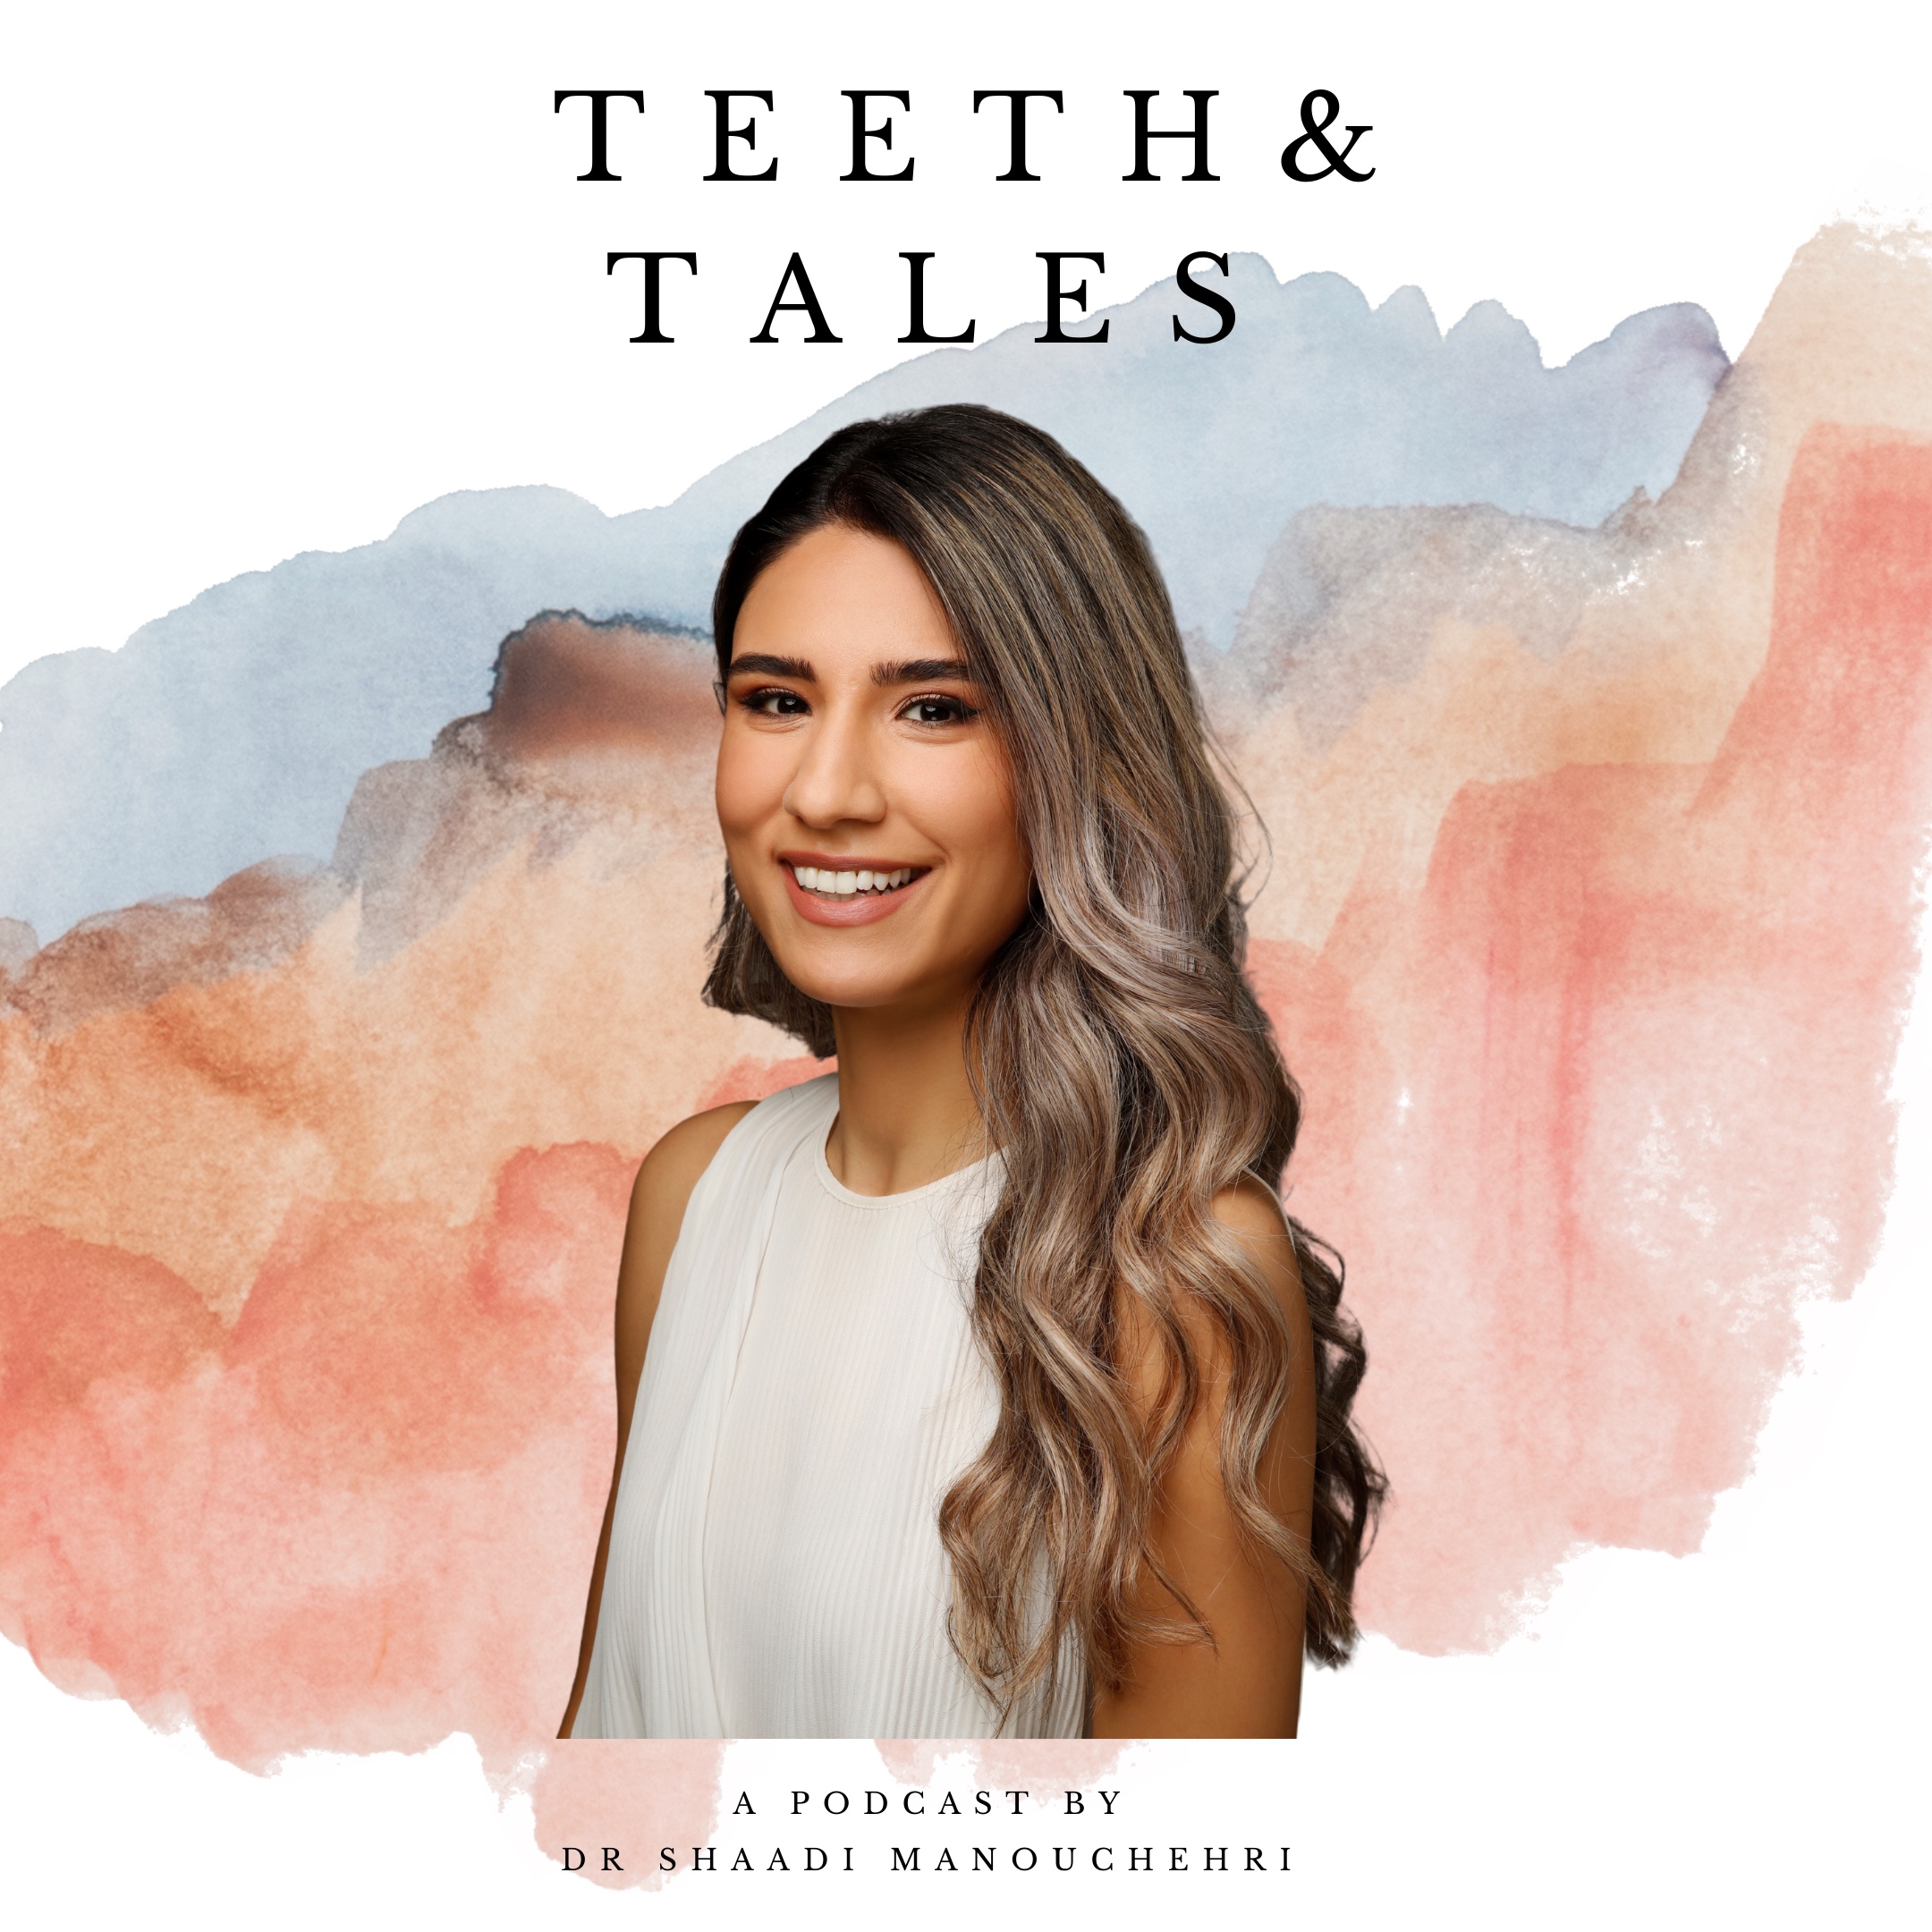 Teeth & Tales by Dr Shaadi Manouchehri